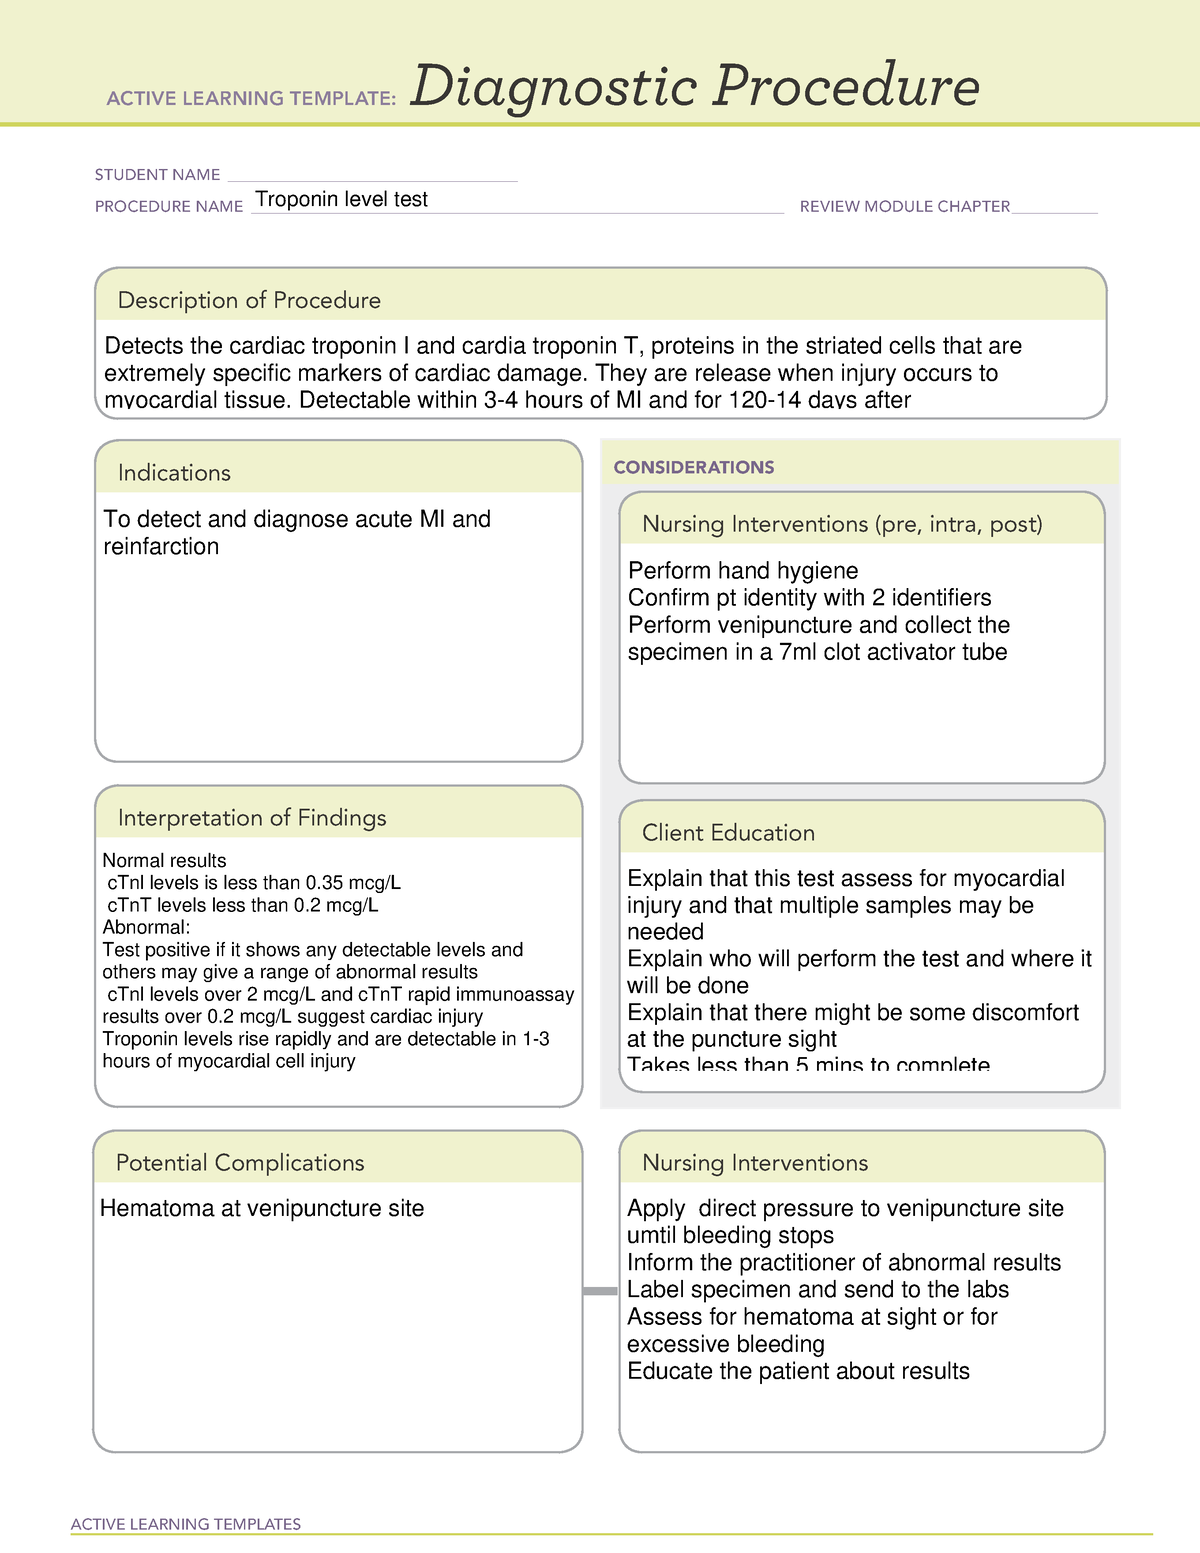 ati-diagnostic-procedure-troponin-pdf-active-learning-templates